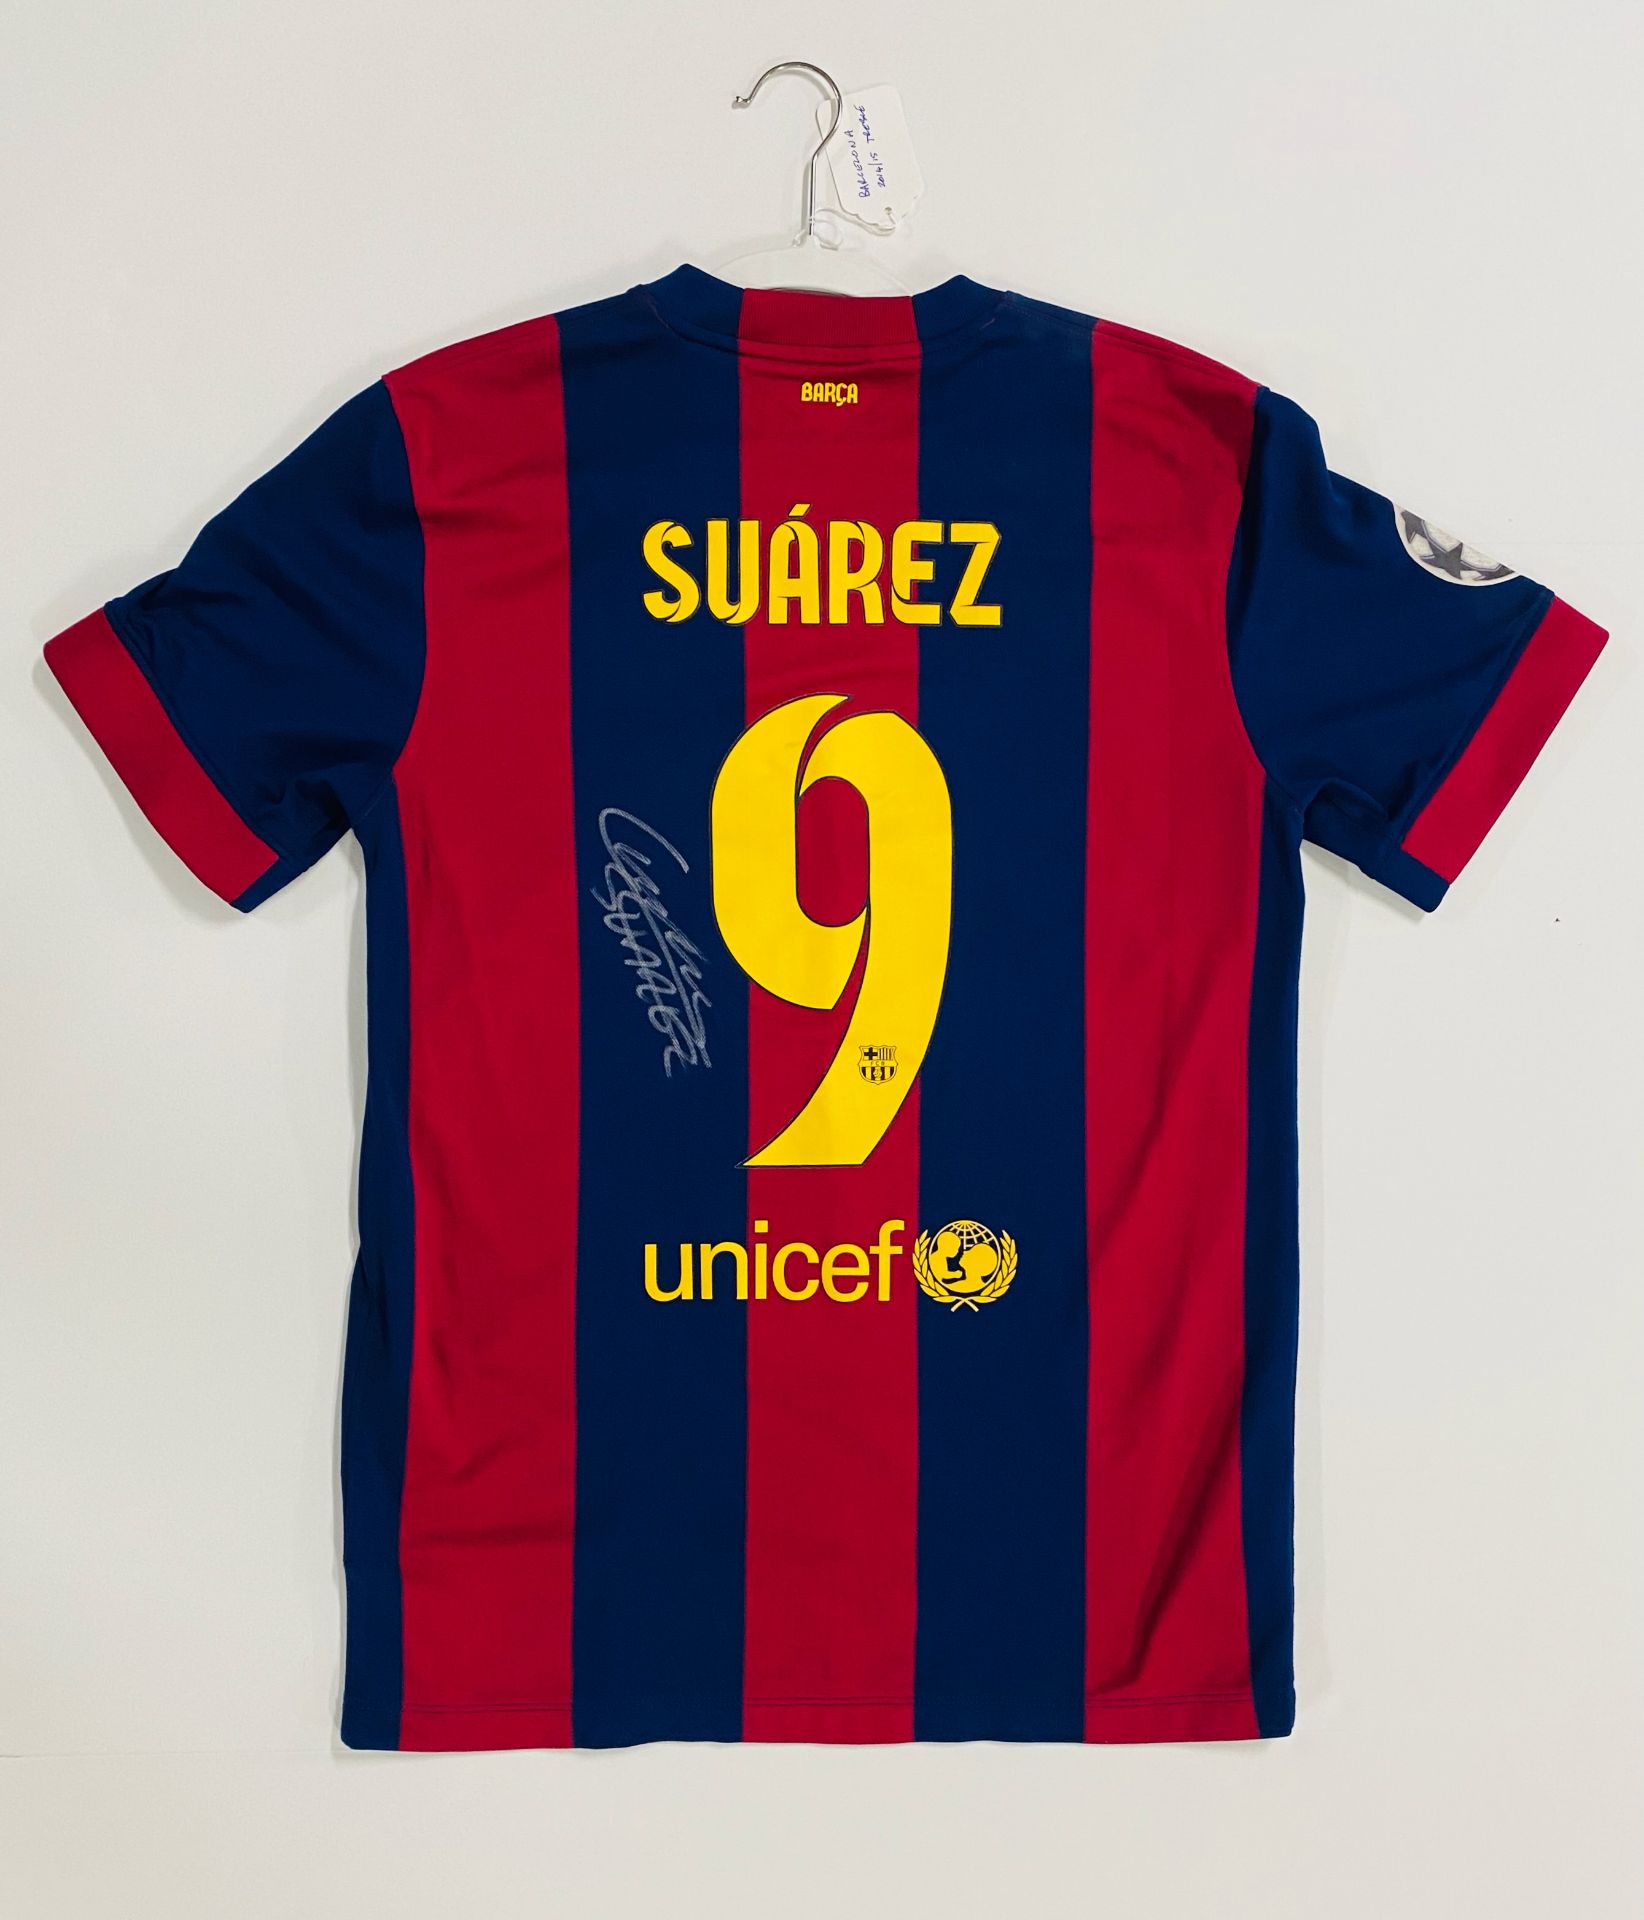 Barcelona 2014/2015 treble winners signed jersey - Image 2 of 3